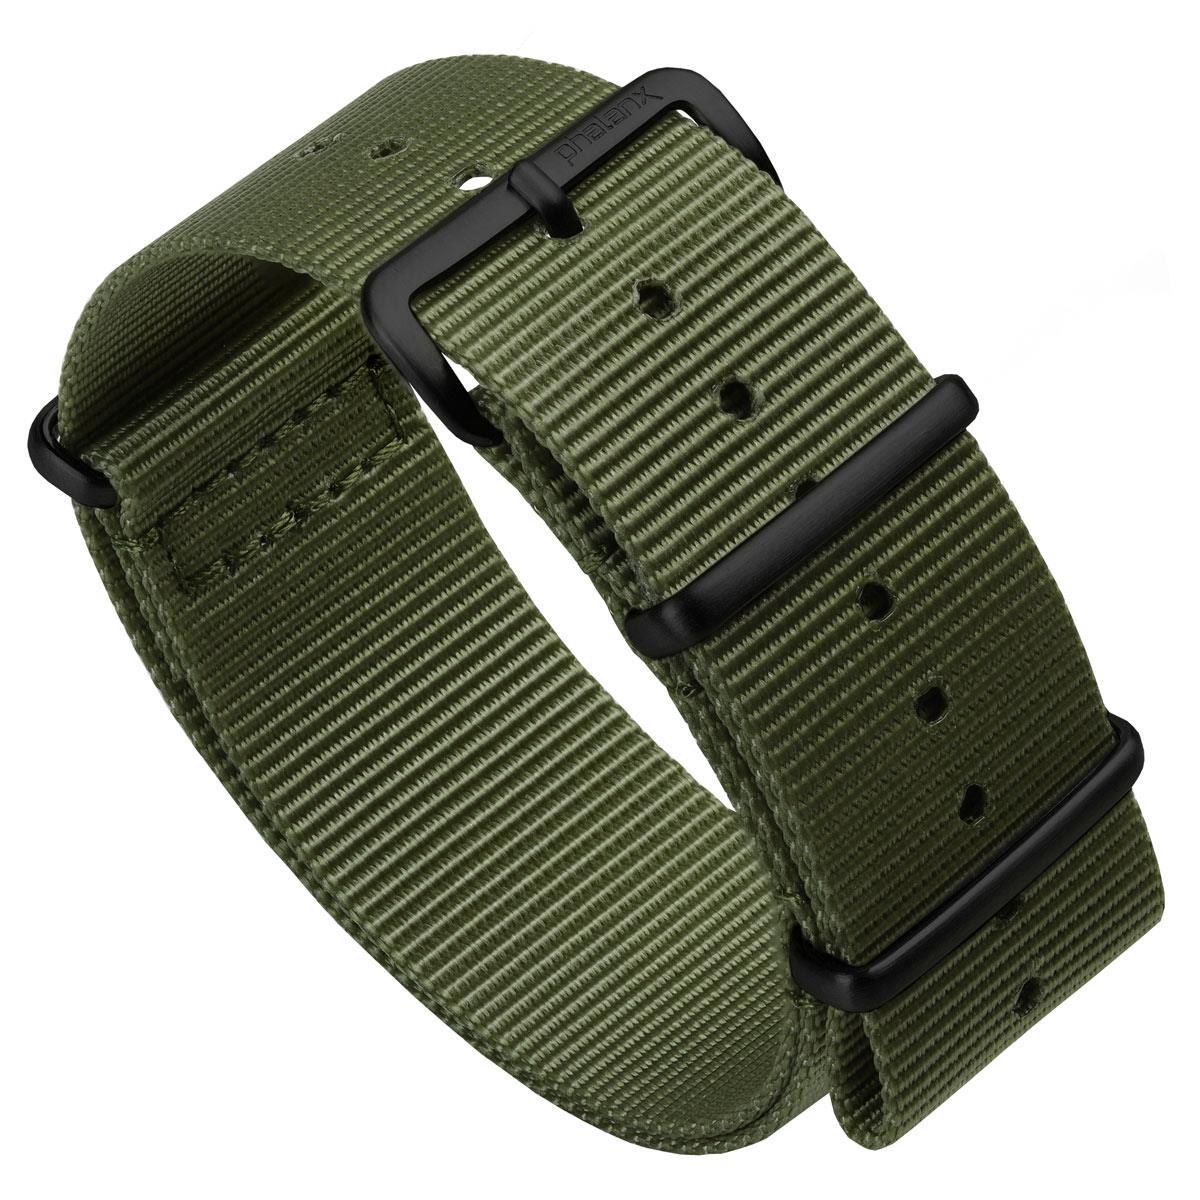 Phalanx Nylon Military Watch Strap - Army Green - IP Black